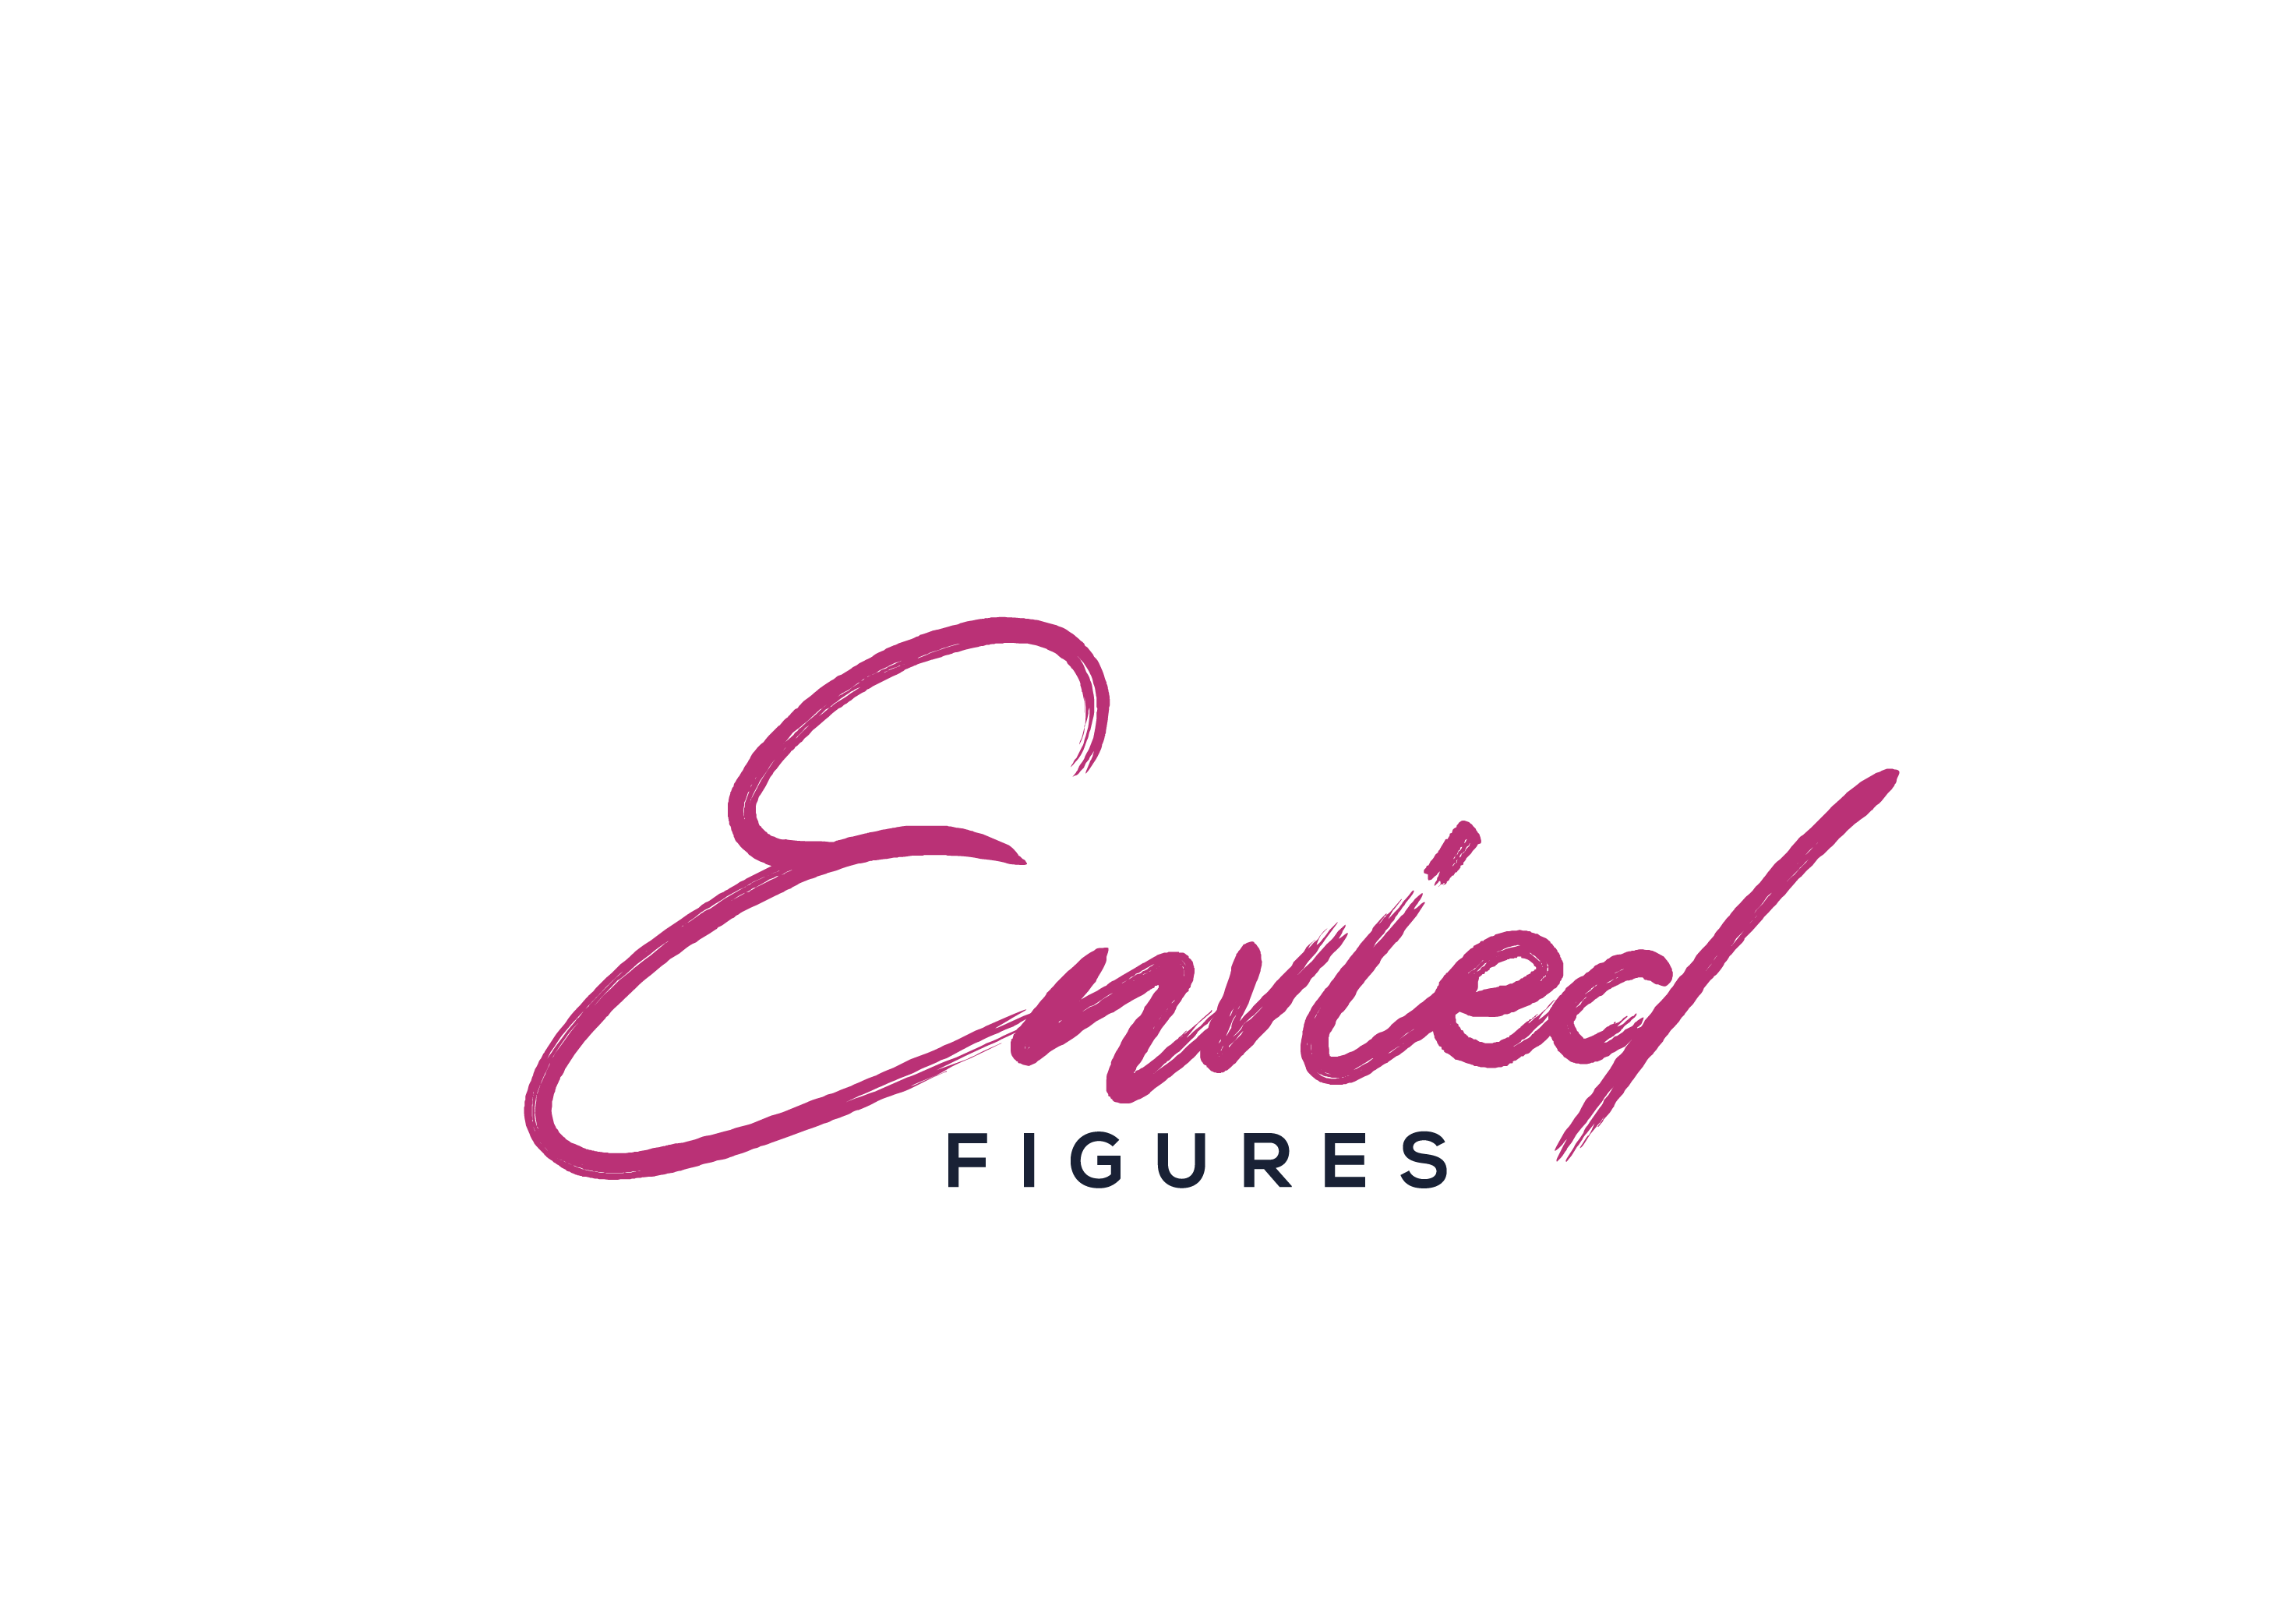 Envied figures Logo